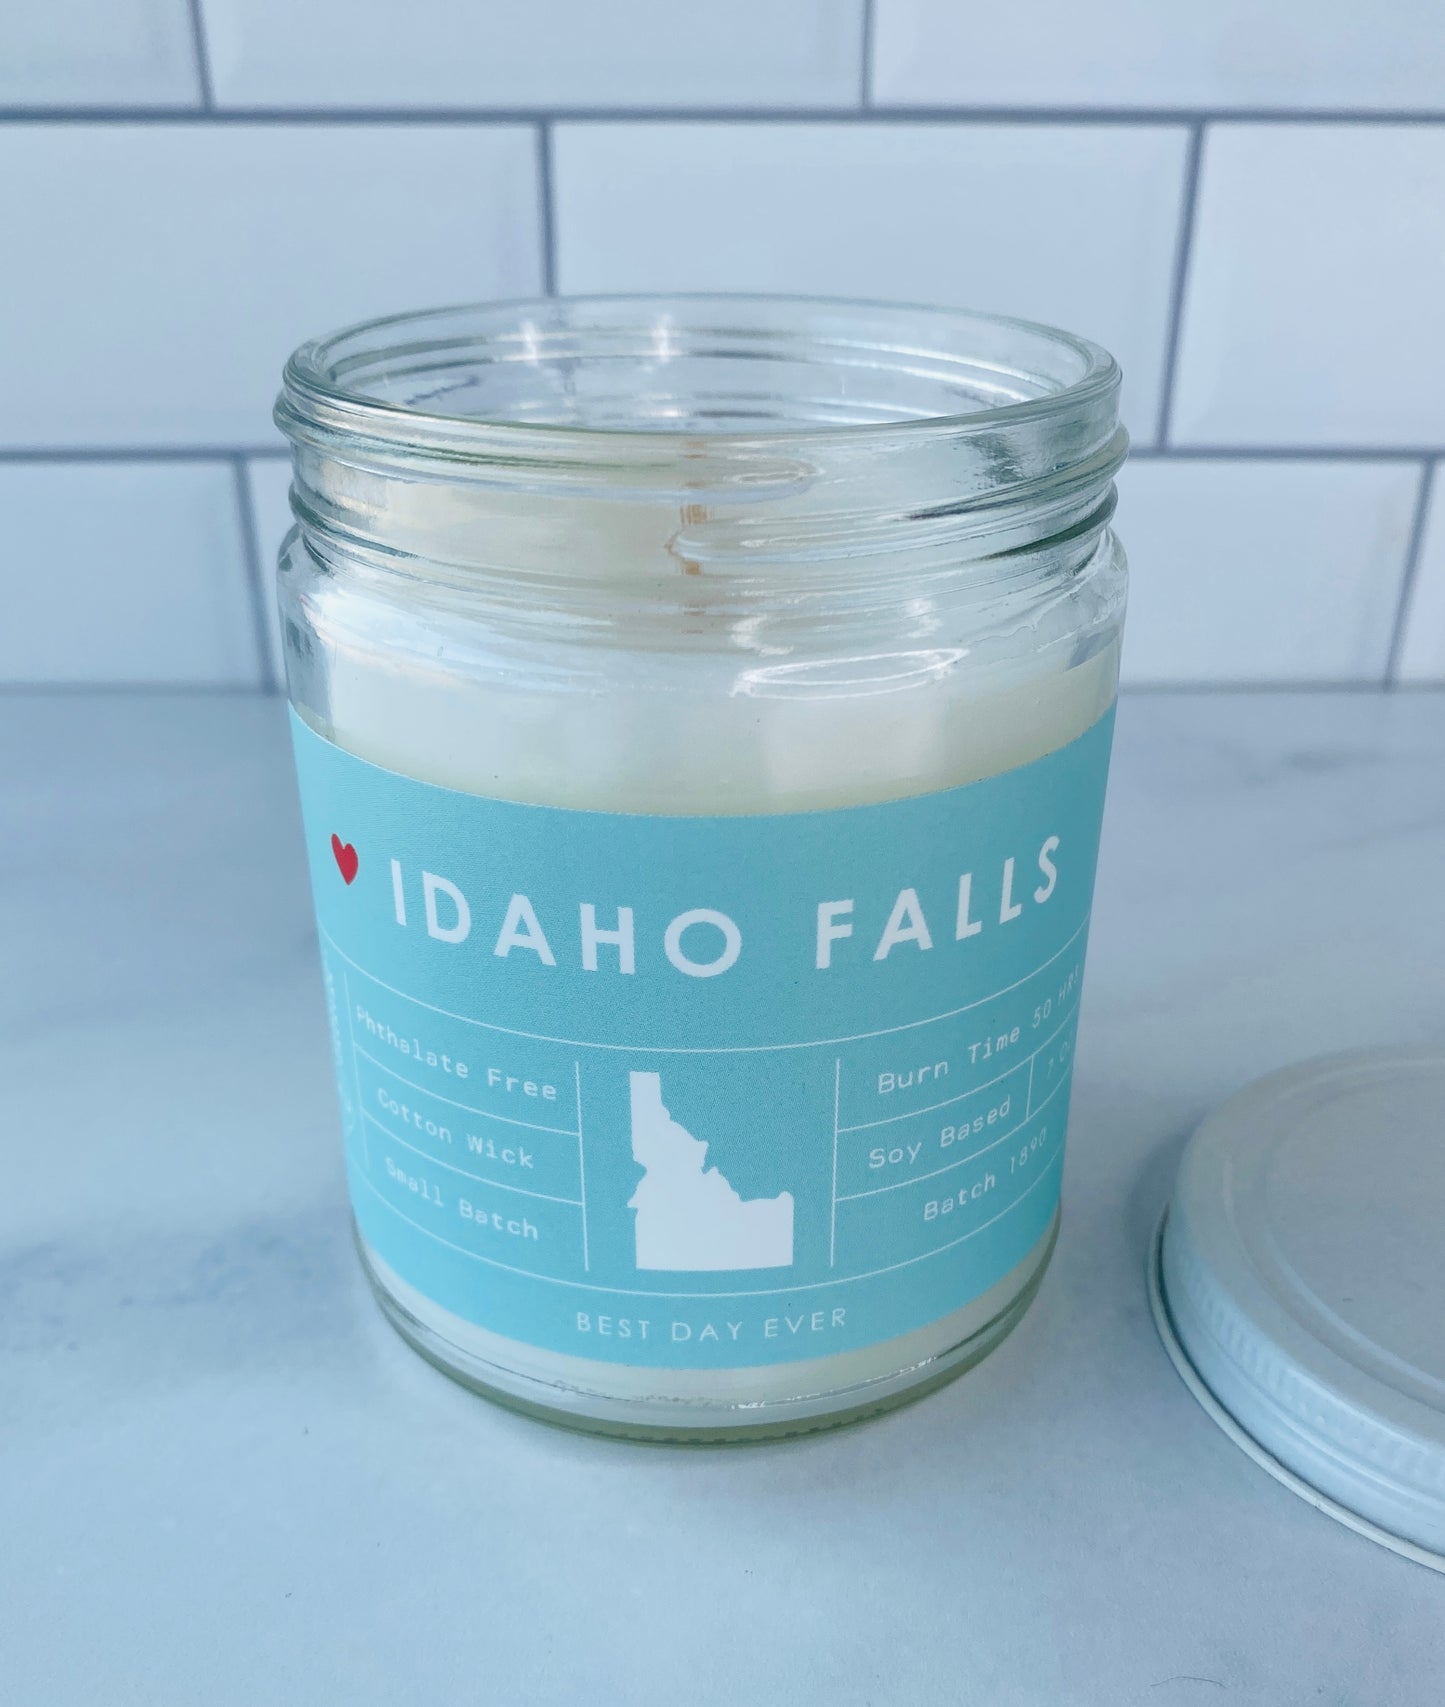 Idaho Falls, ID Candle